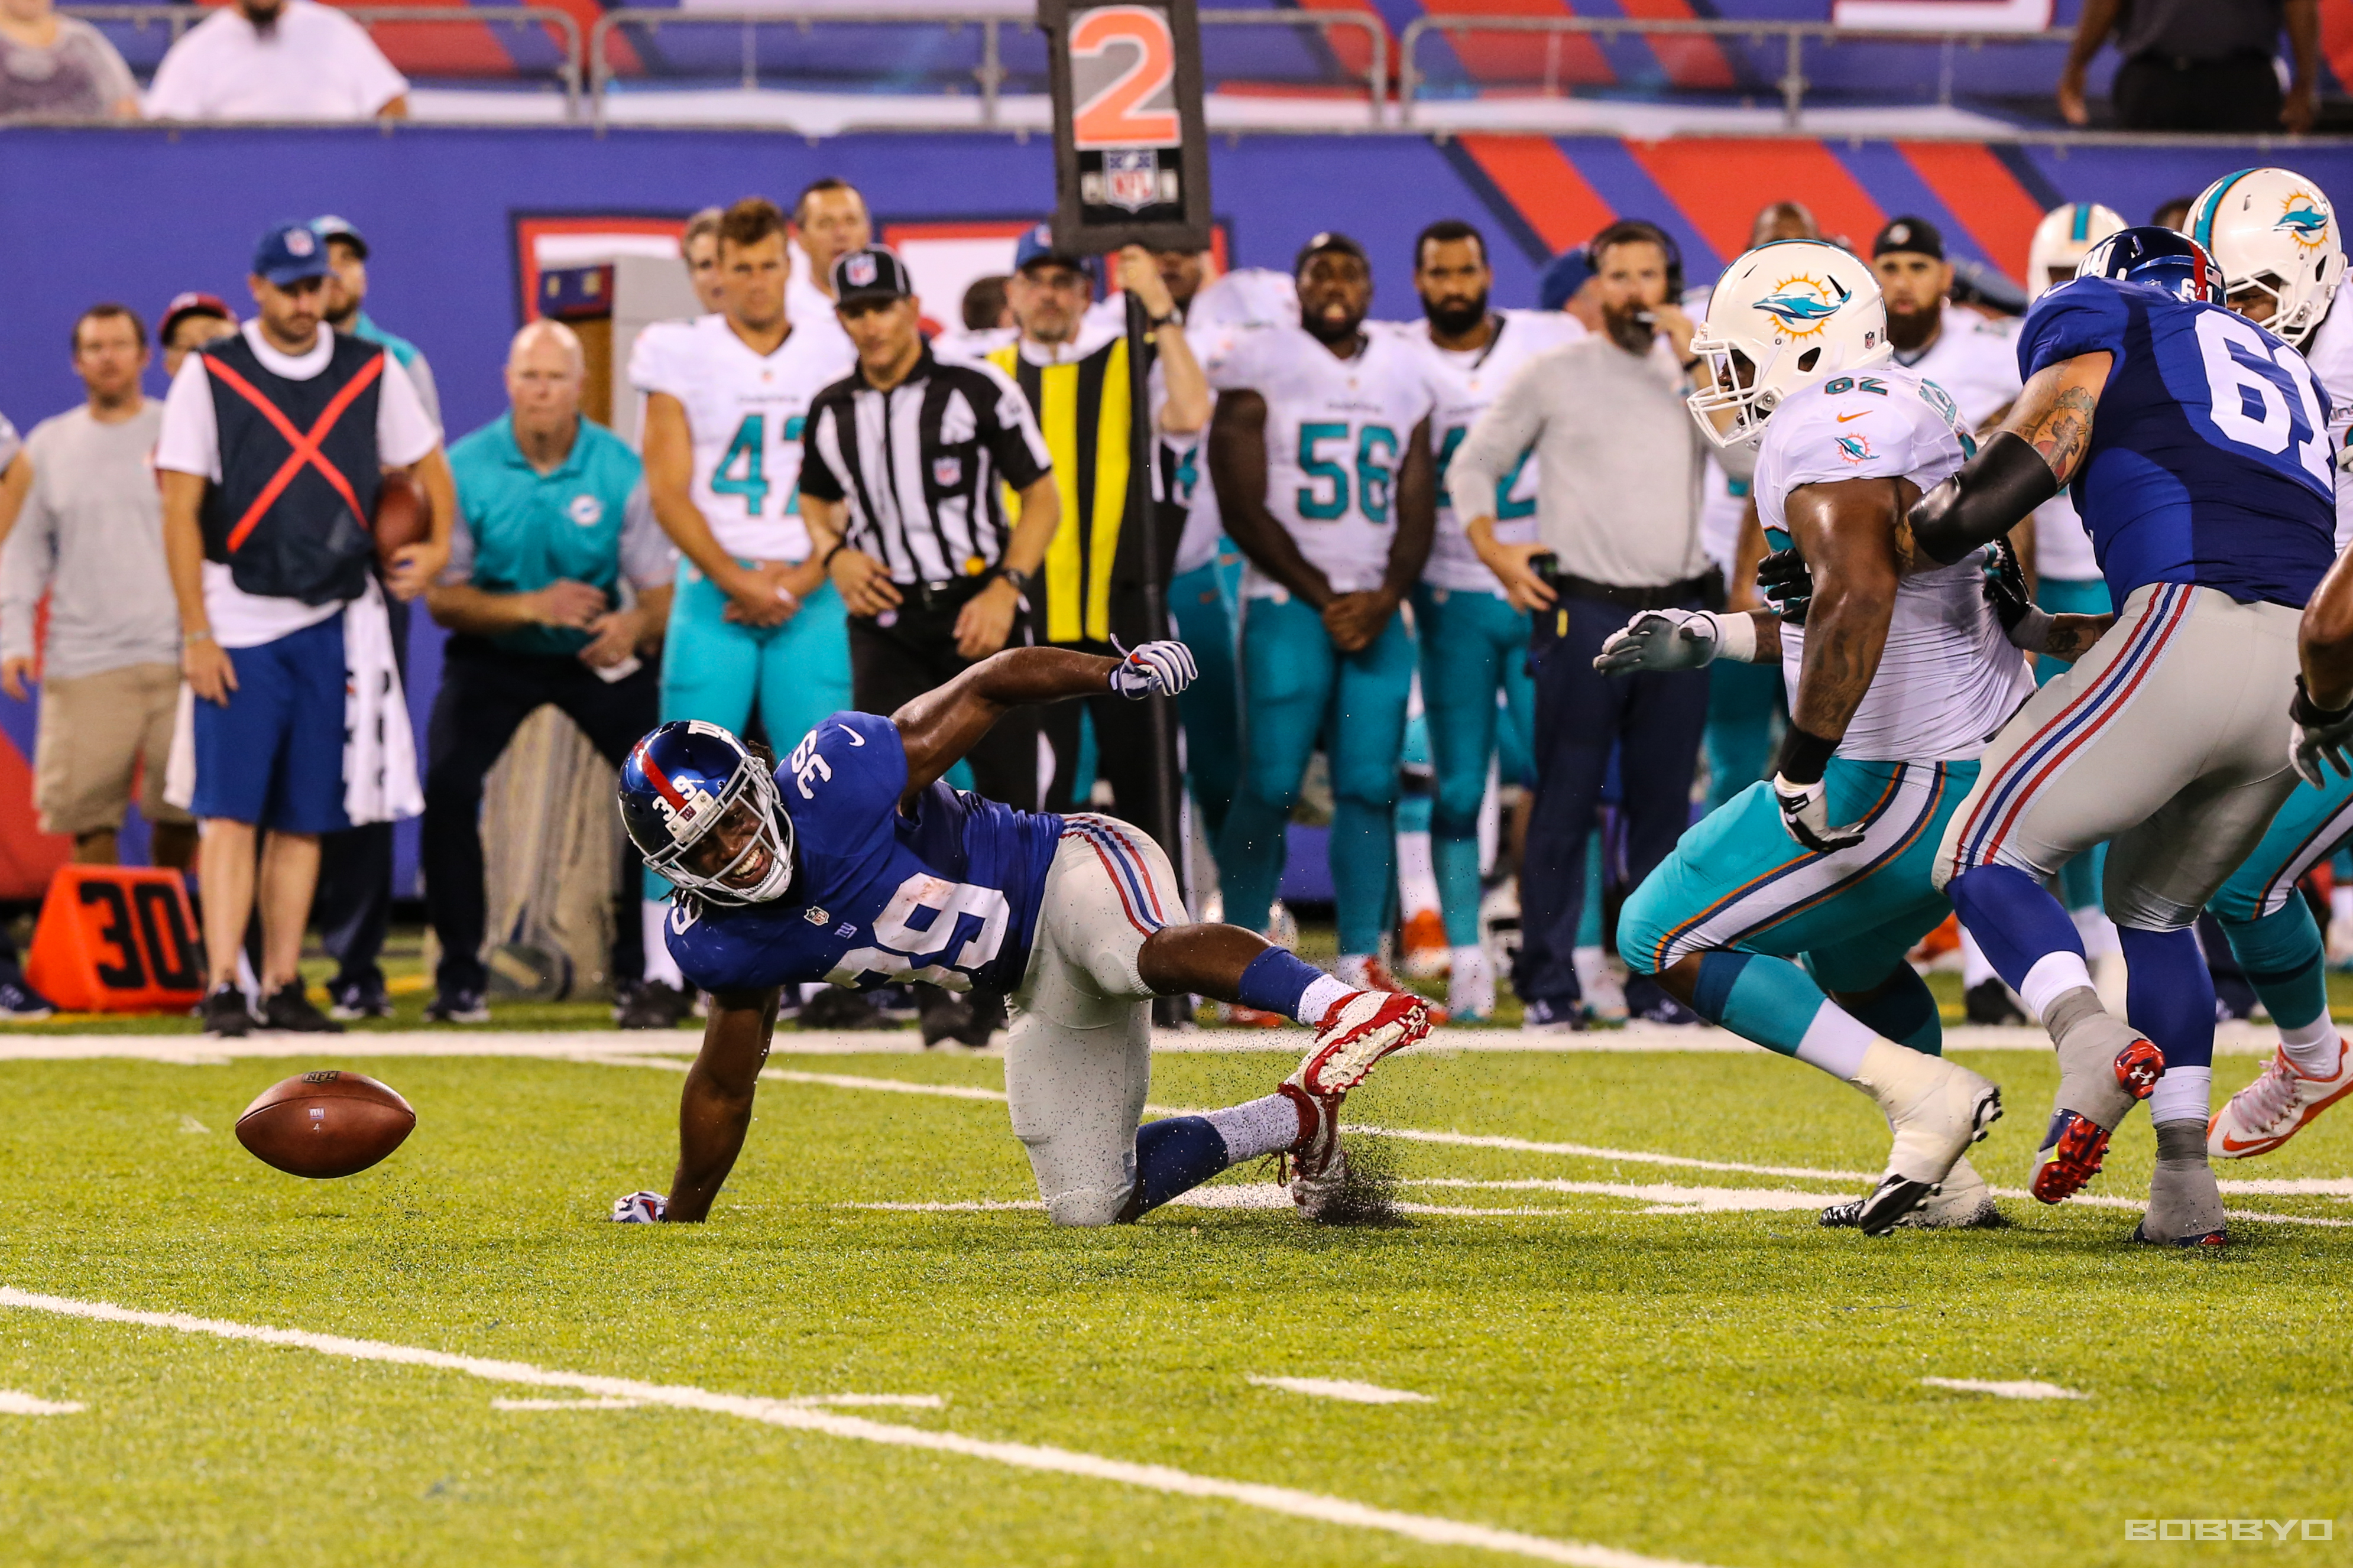 Paul Perkins Fumbles the handoff that would lead to a Miami touchdown drive (photo: Bobby O'Hara)